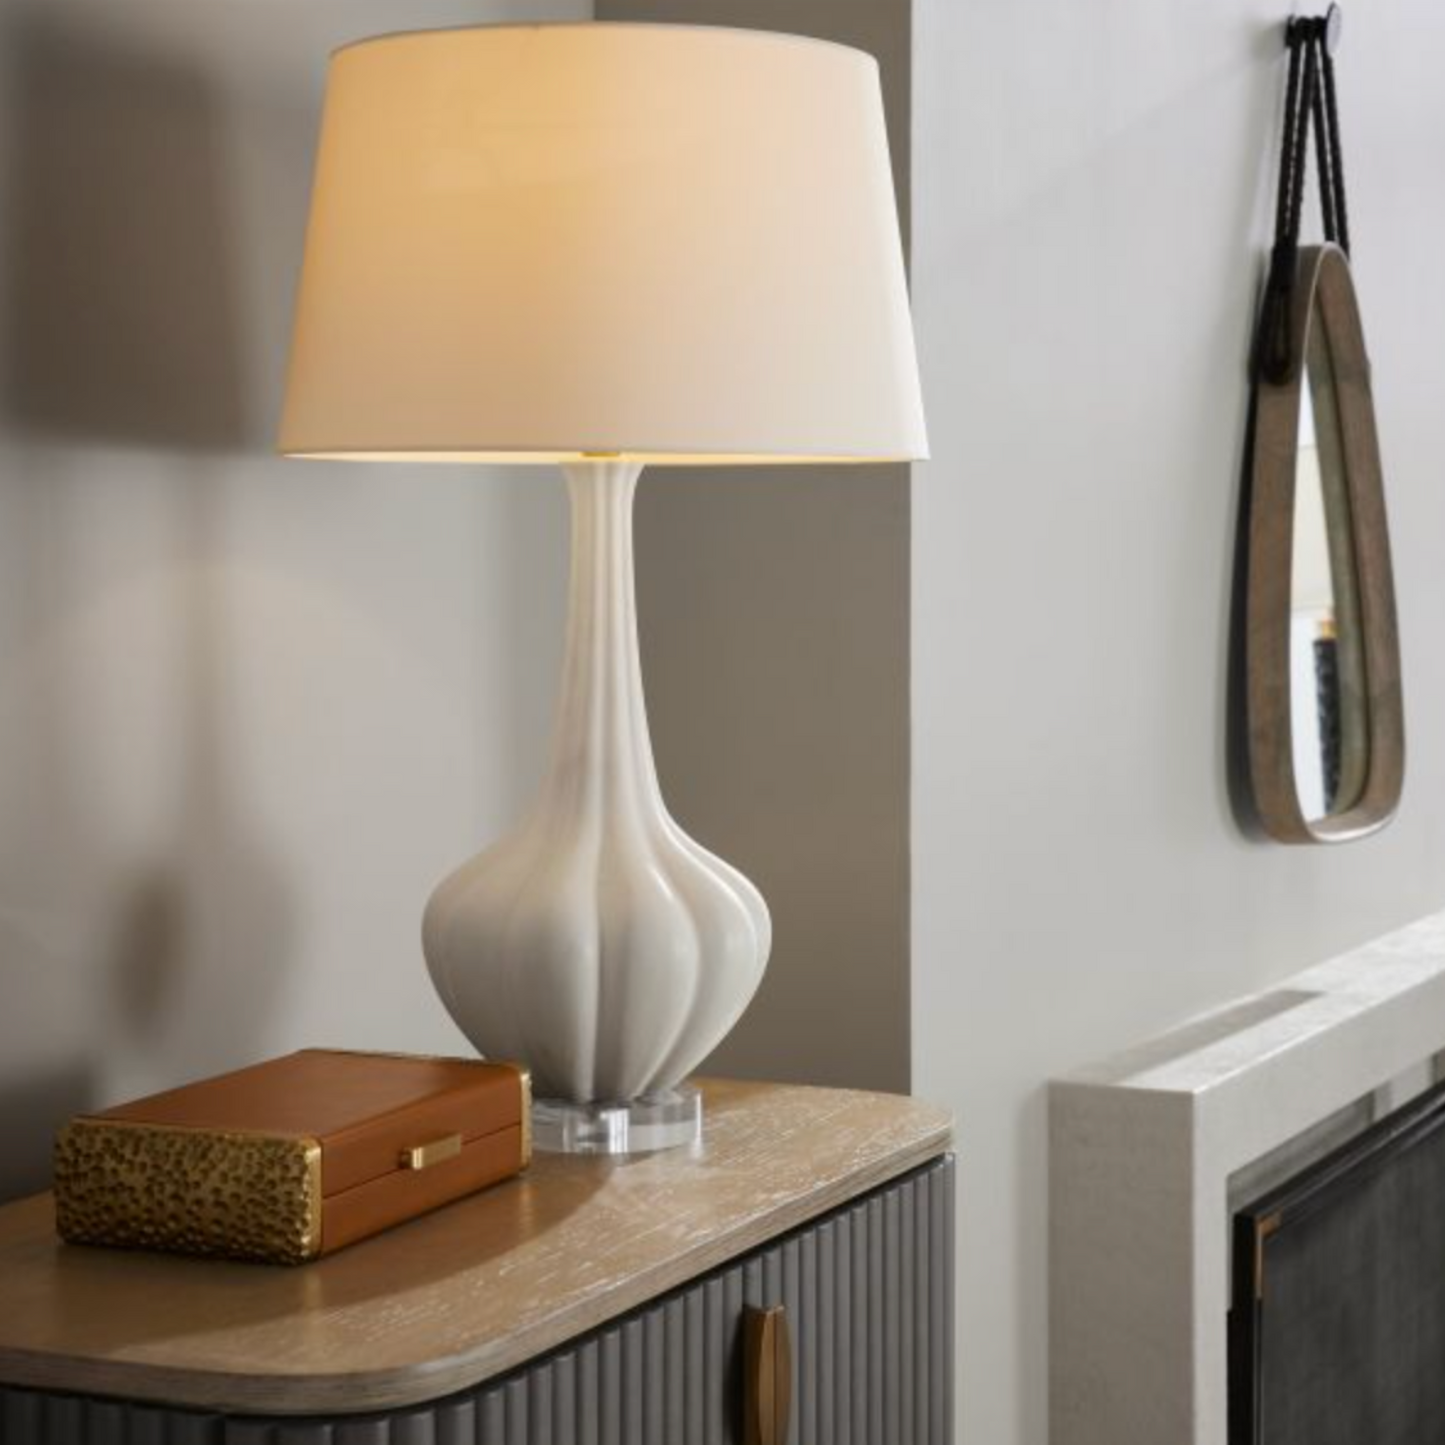 Pali Lamp - Matte Ivory Ceramic Table Lamp with Acrylic Base